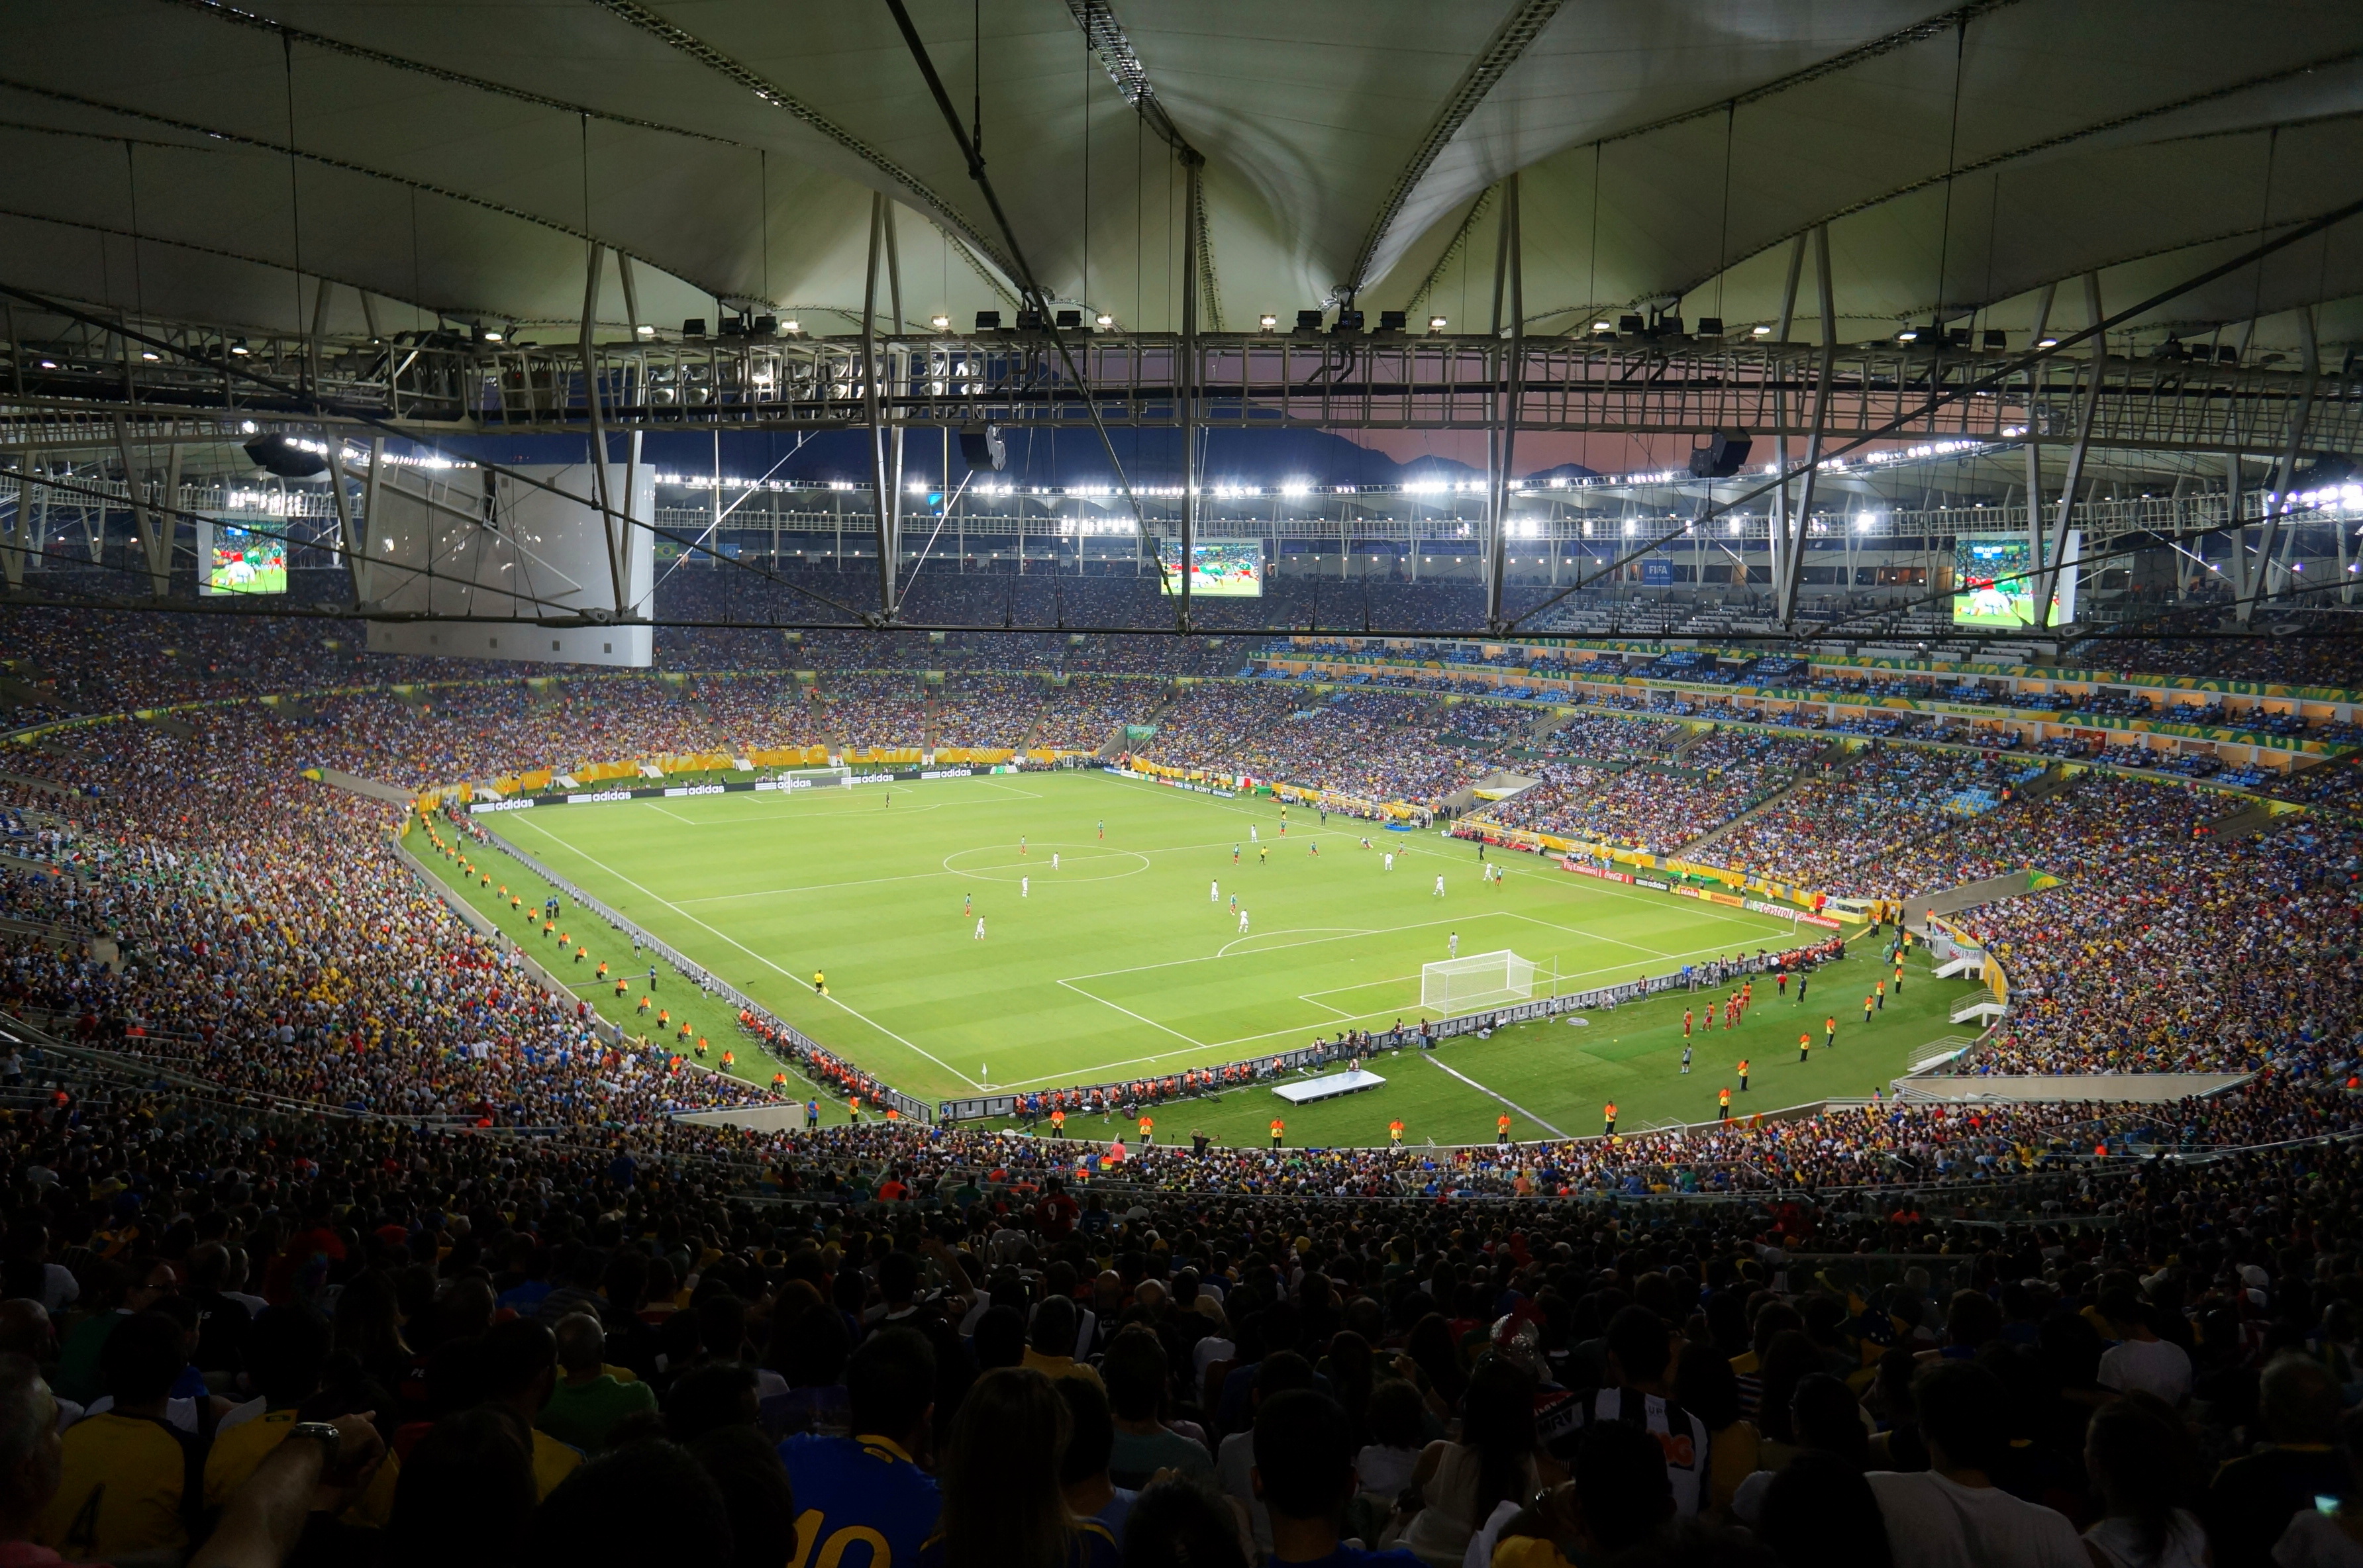 September Football at Maracanã in Rio